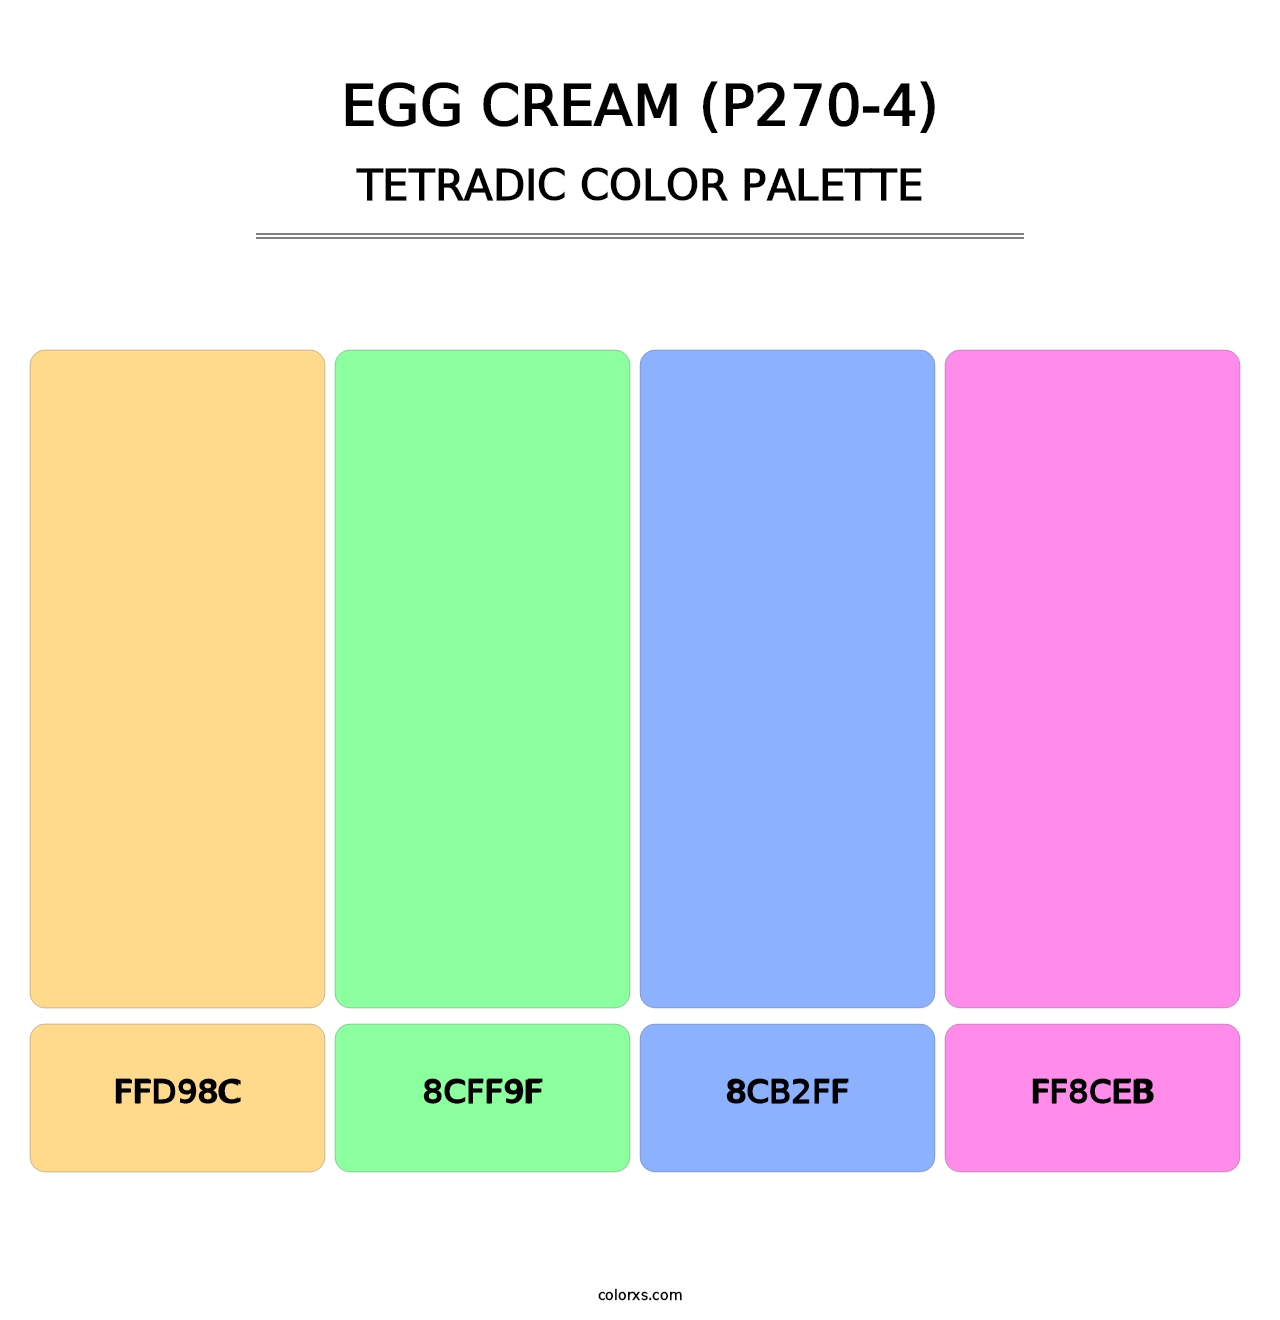 Egg Cream (P270-4) - Tetradic Color Palette